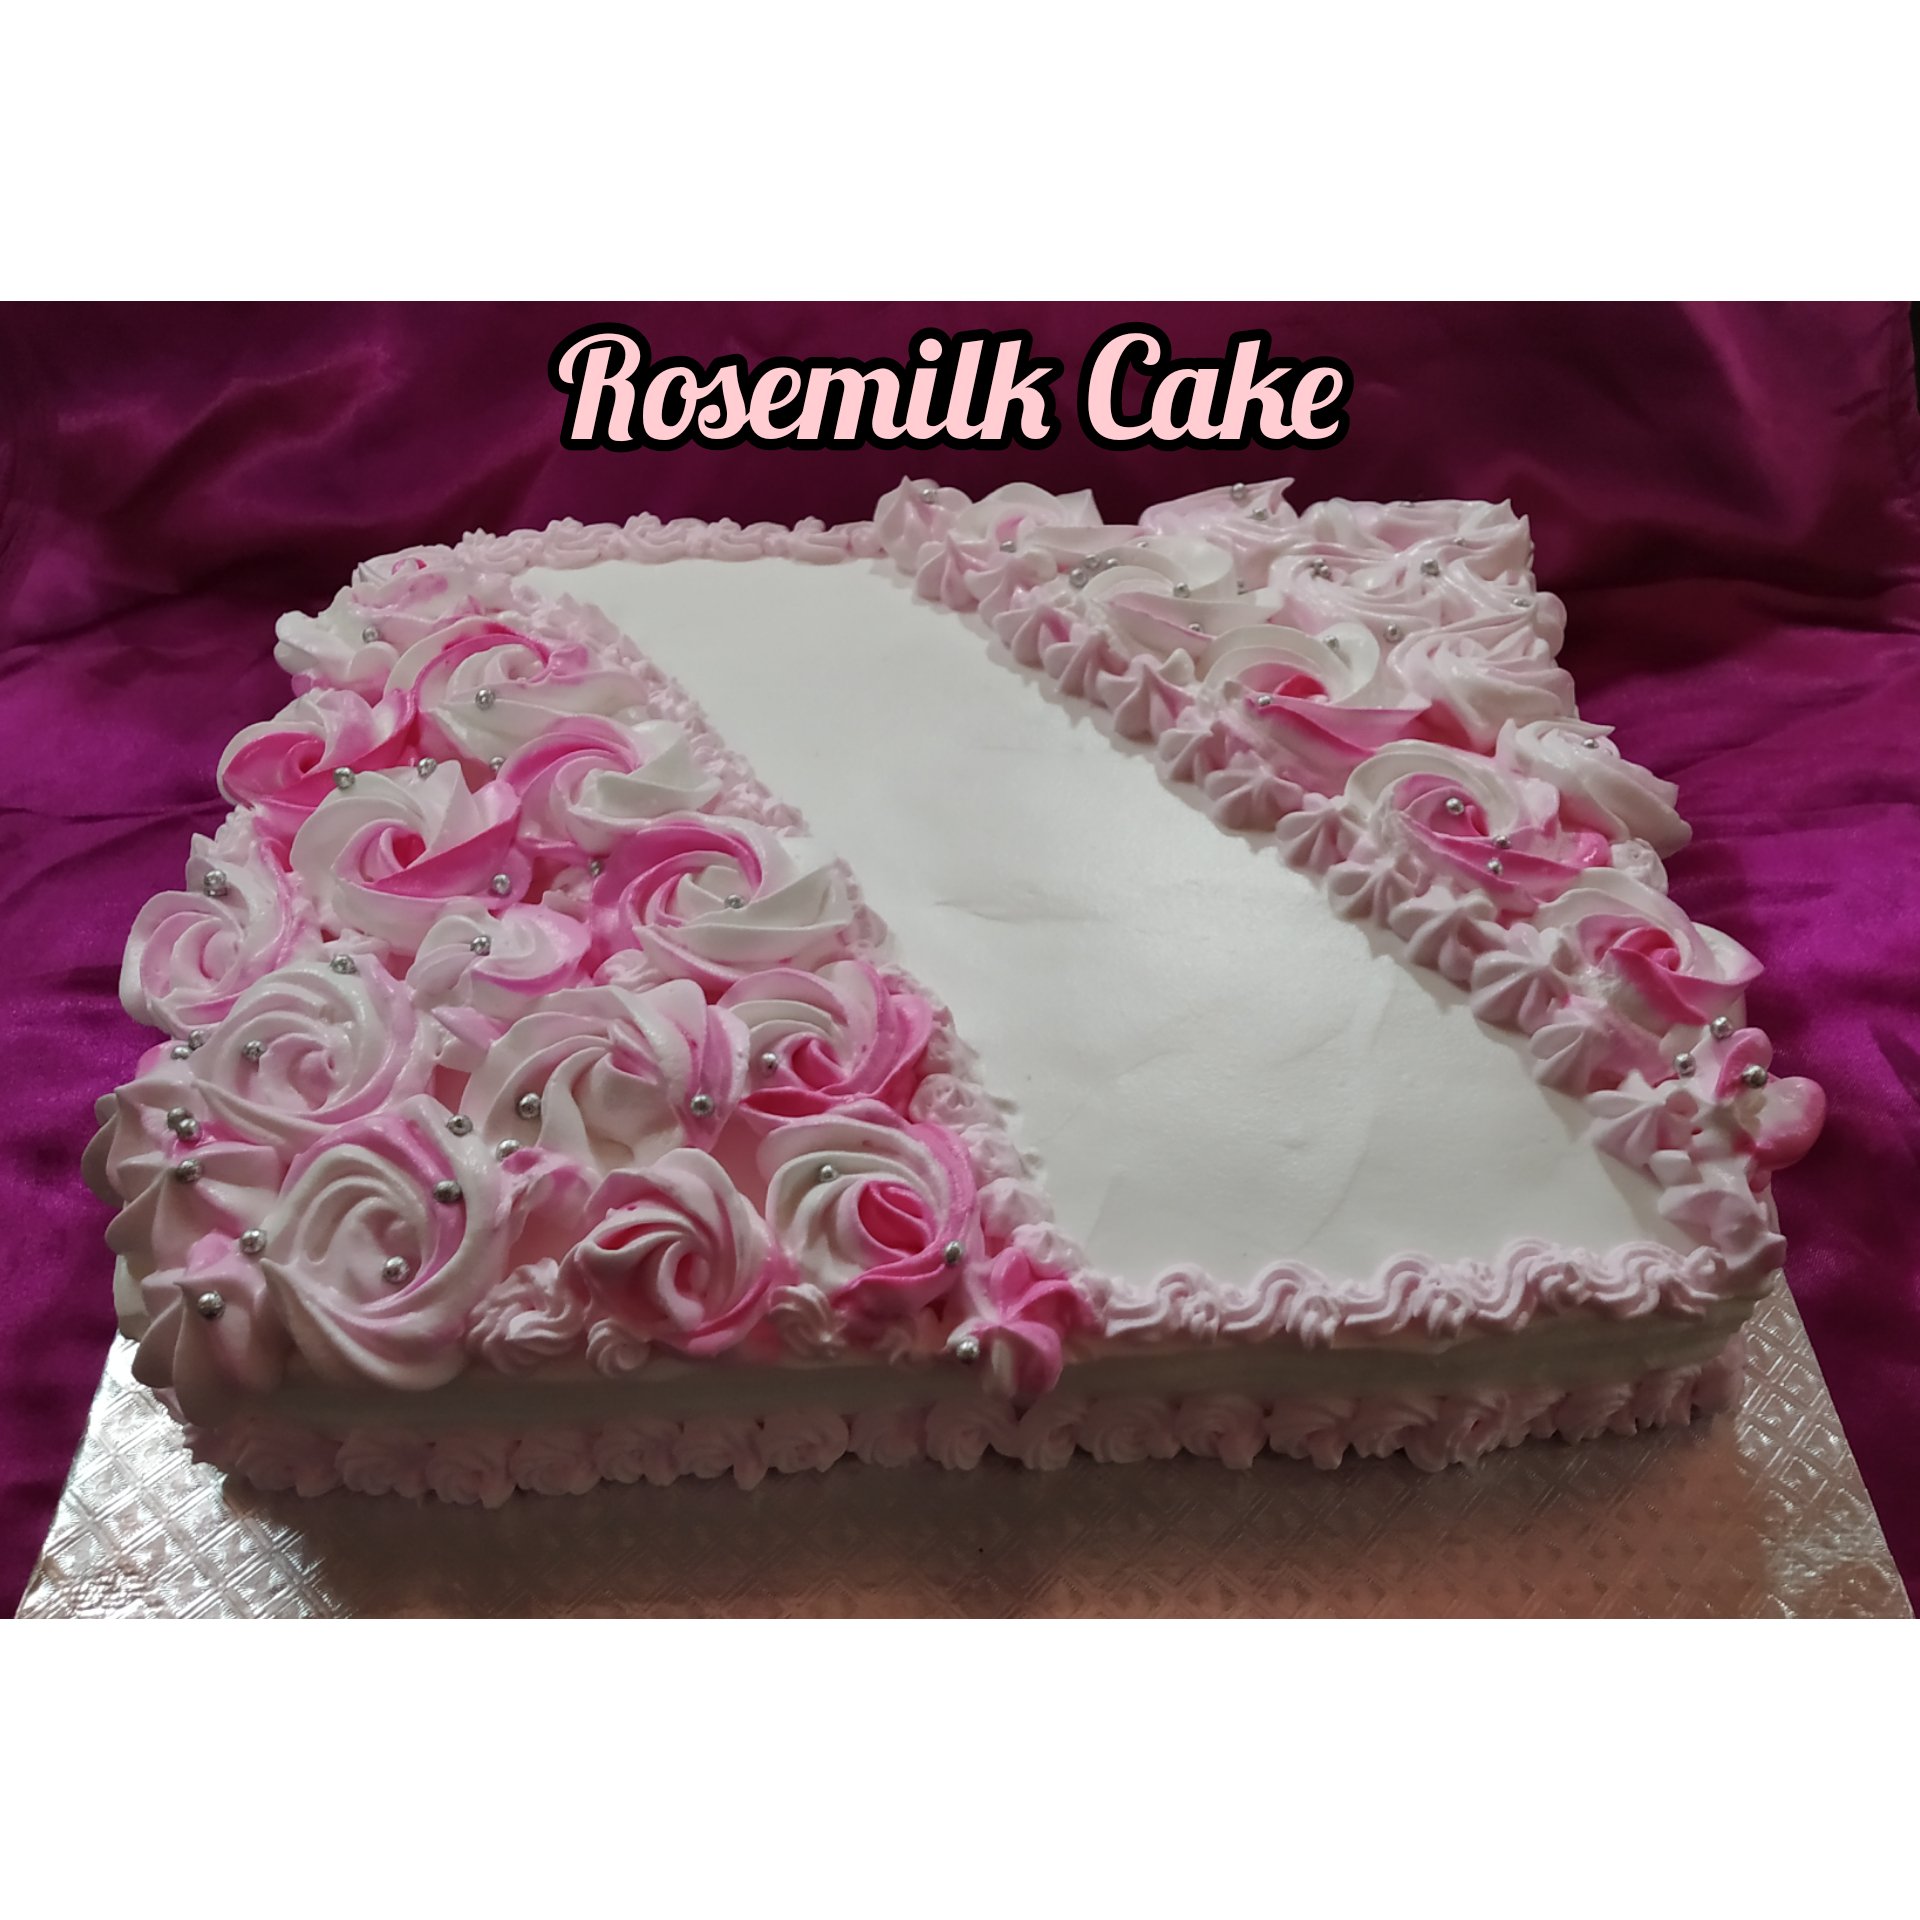 MILK CAKE Recipe || Easy And Simple Milk Cake Recipe || TRESLECHES CAKE -  YouTube